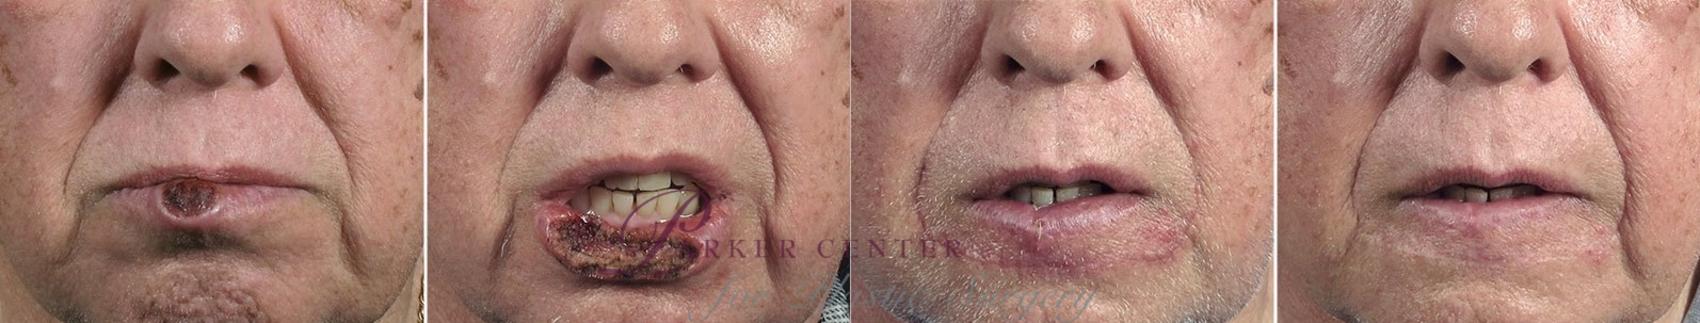 Skin Cancer Treatment Case 1071 Before & After View #2 | Paramus, NJ | Parker Center for Plastic Surgery